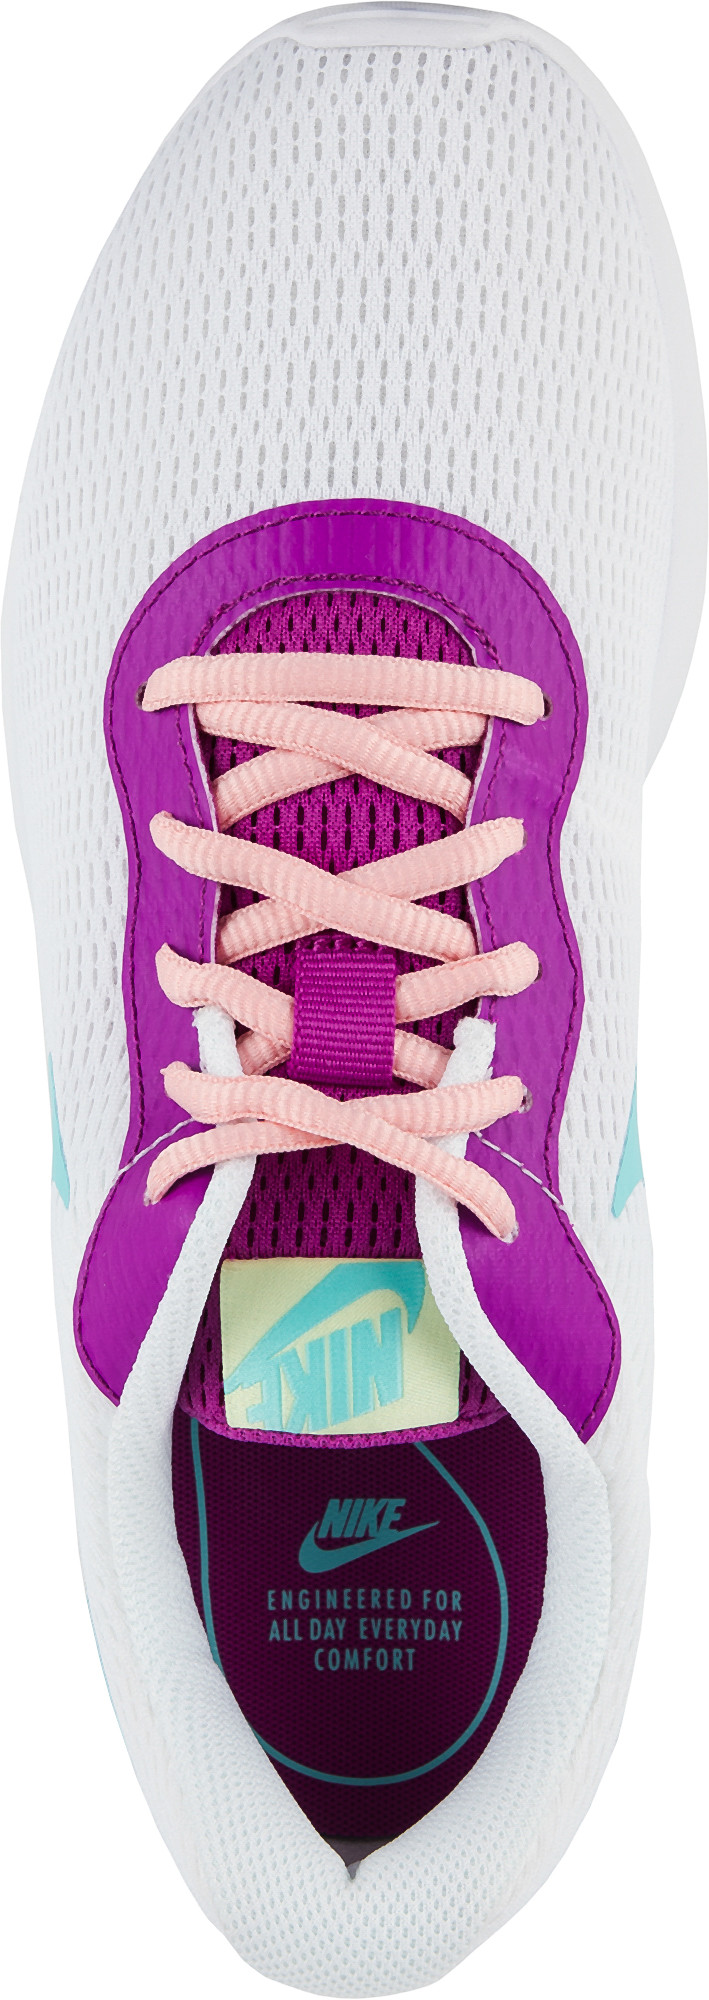 Кроссовки женские Nike Tanjun